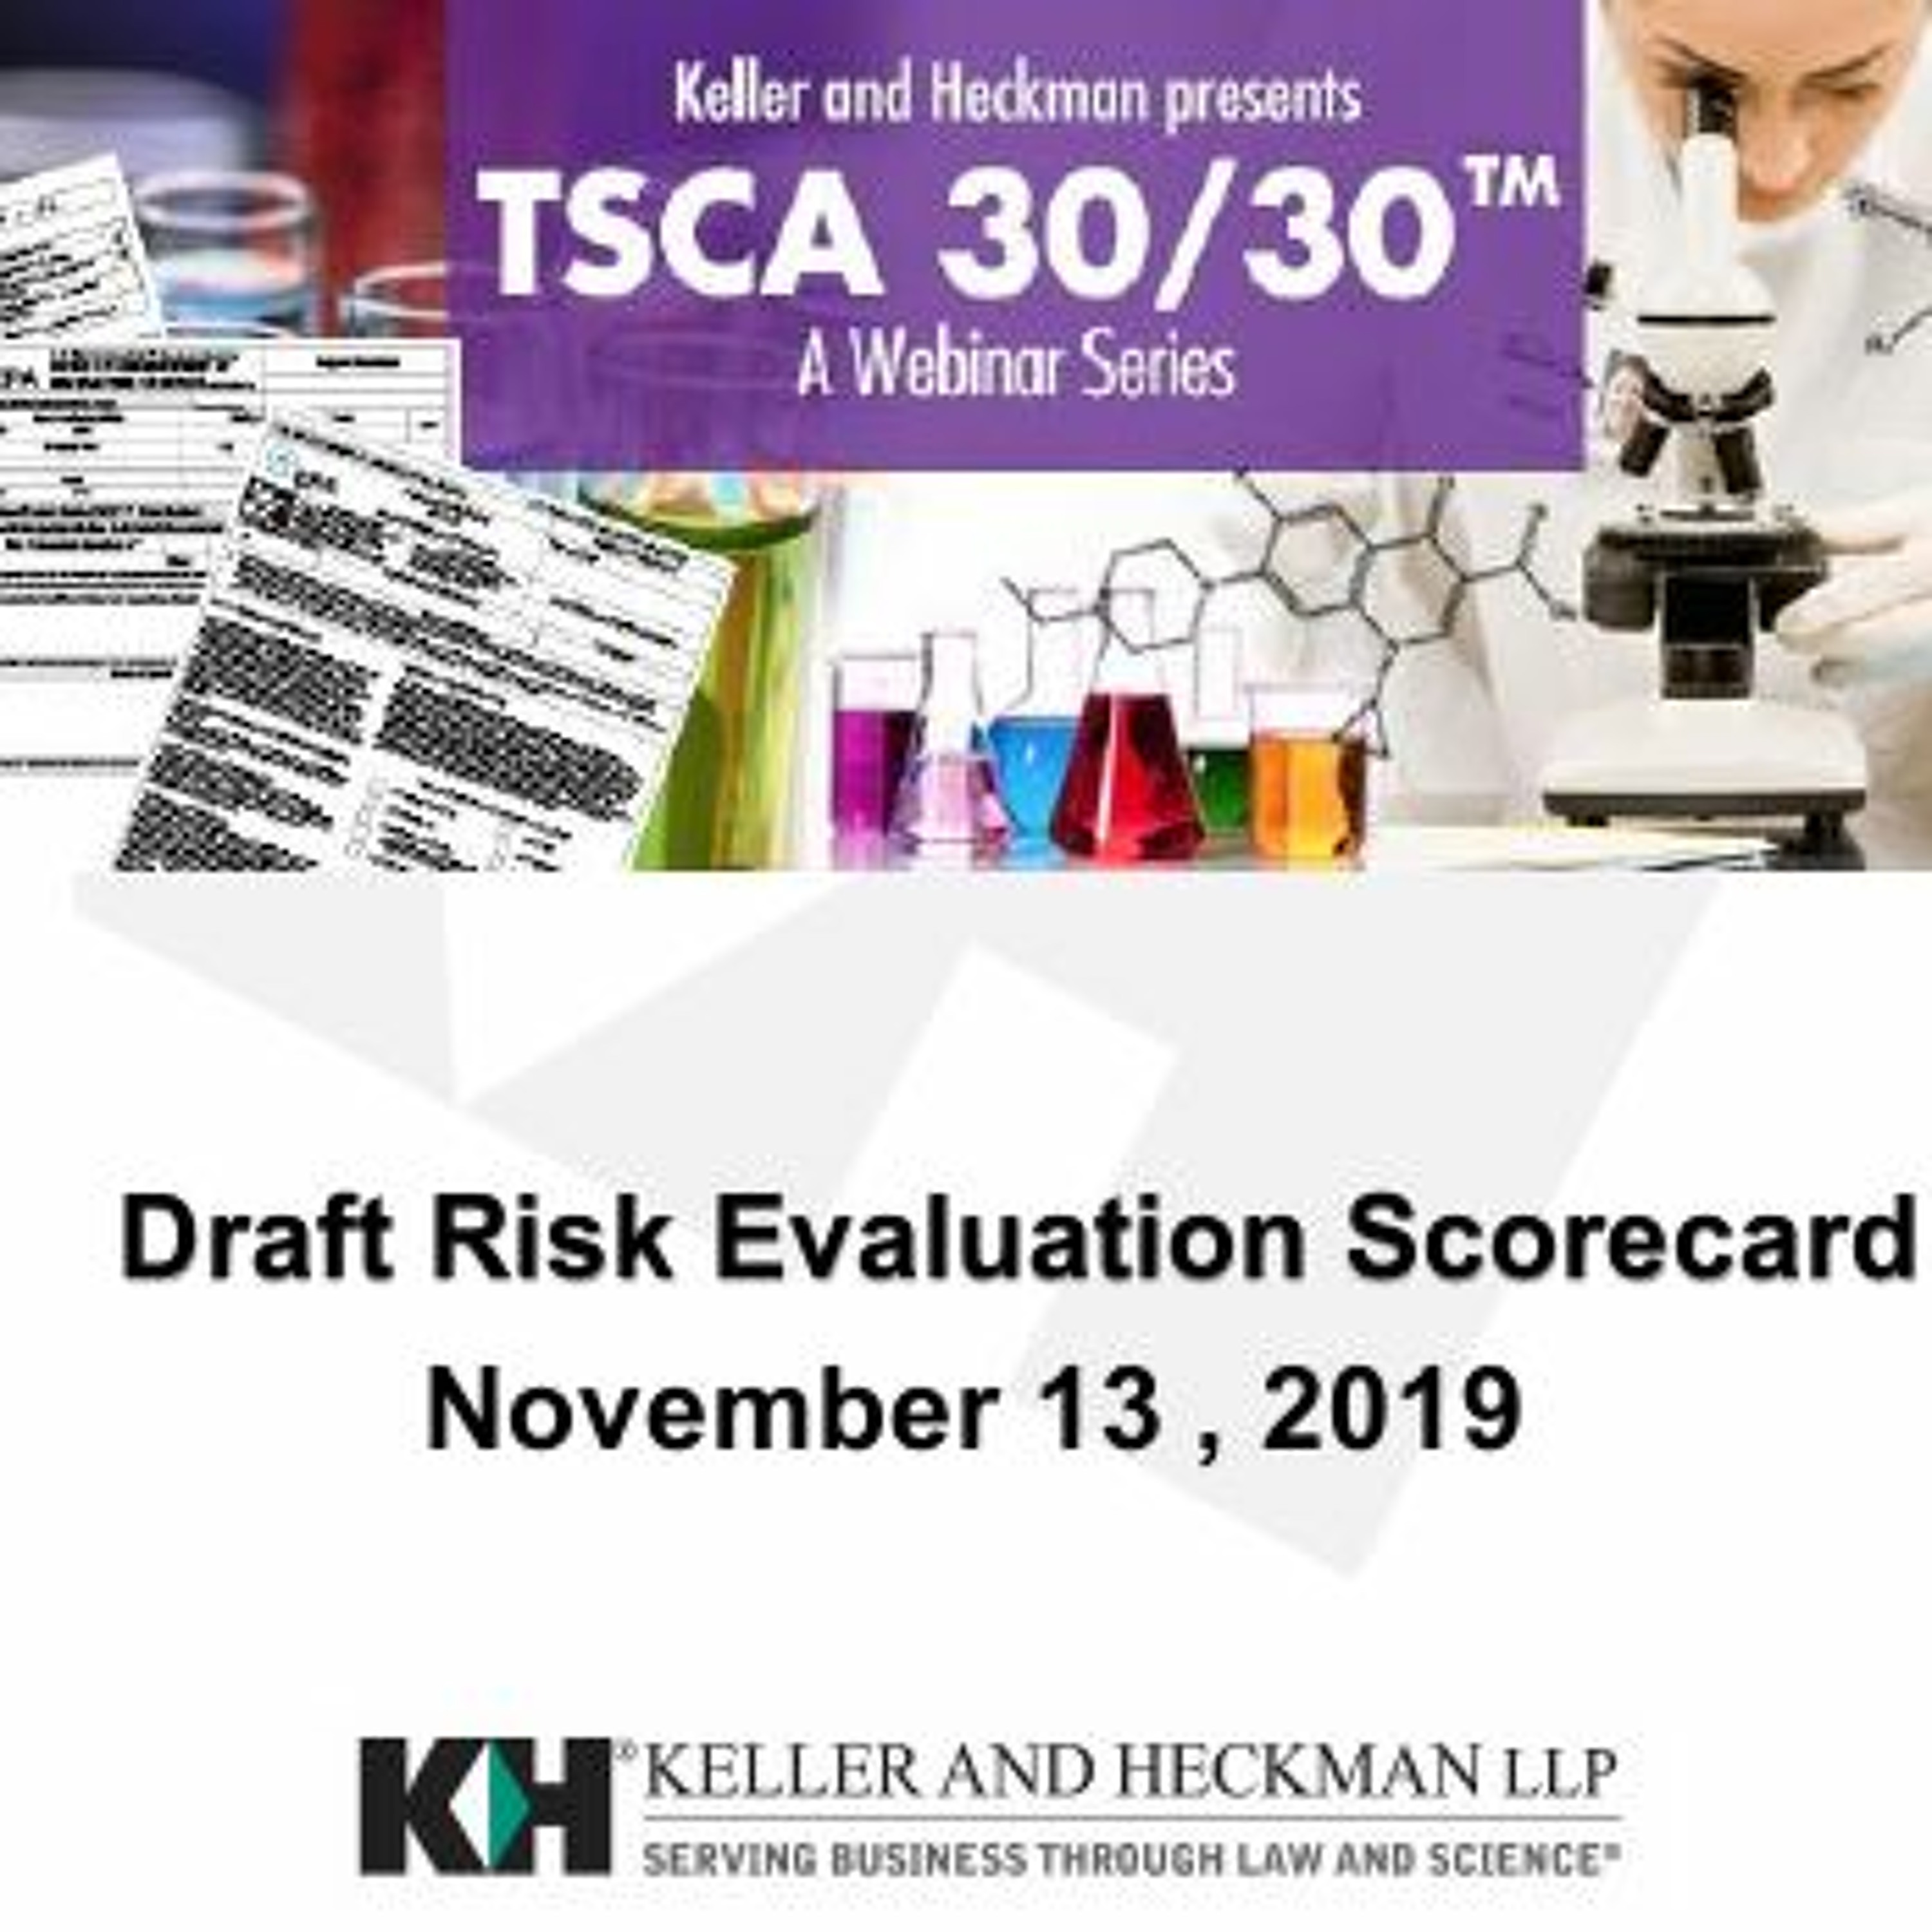 TSCA November 13, 2019 - Draft Risk Evaluation Scorecard